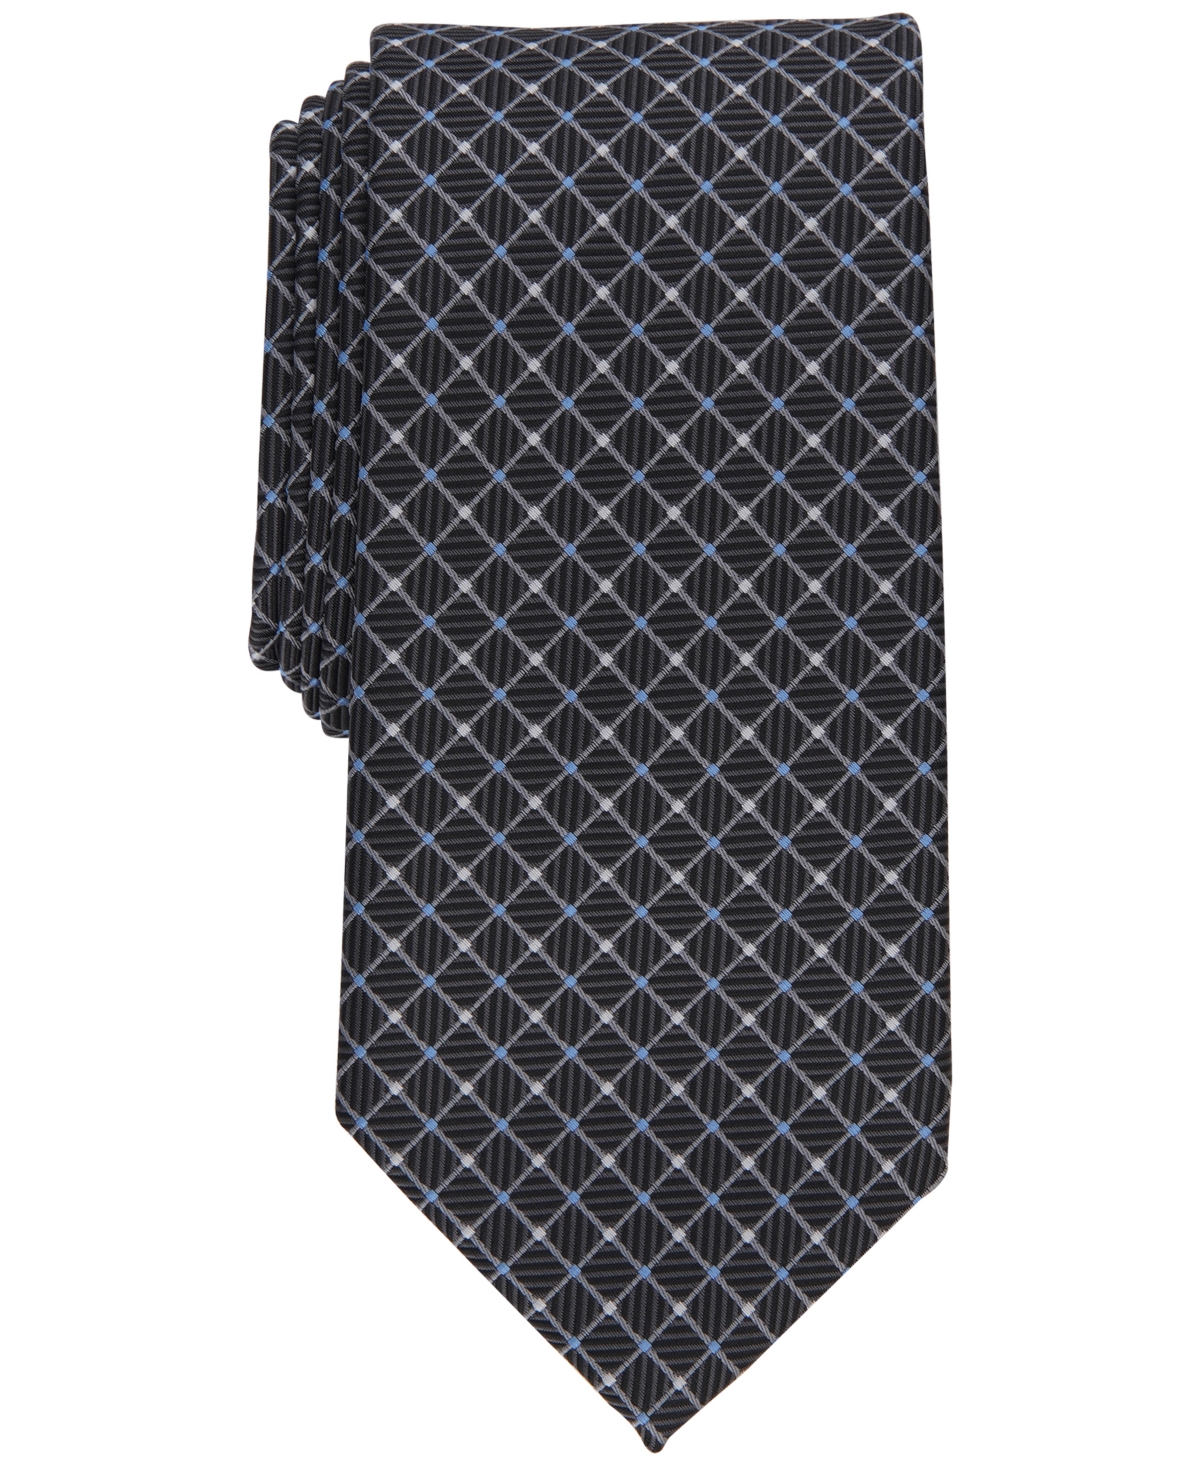 Men's Kaur Classic Geometric Neat Tie, Created for Macy's - Rose